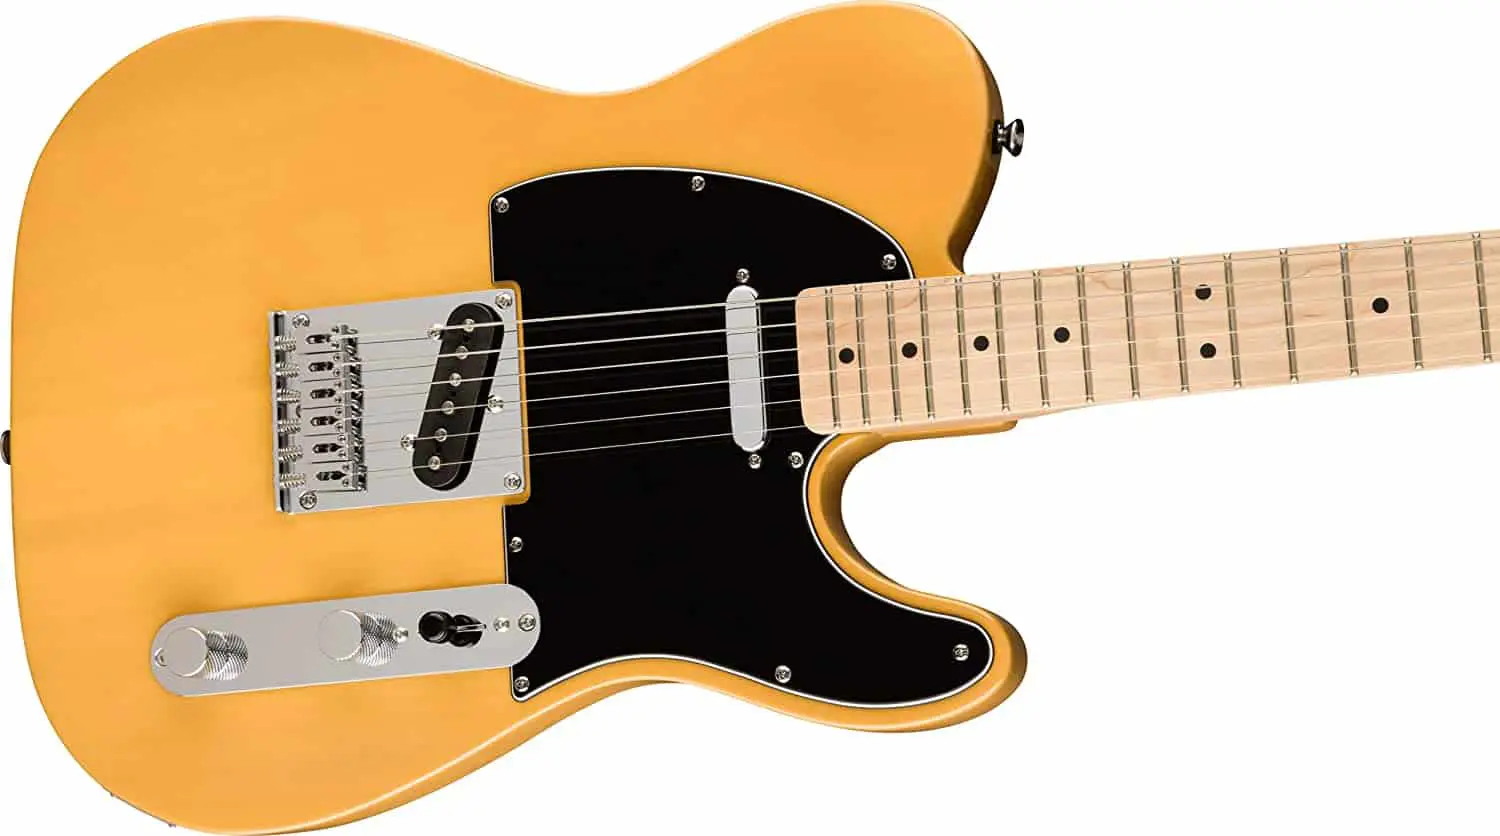 Best budget Fender guitar- Fender Squier Affinity Telecaster